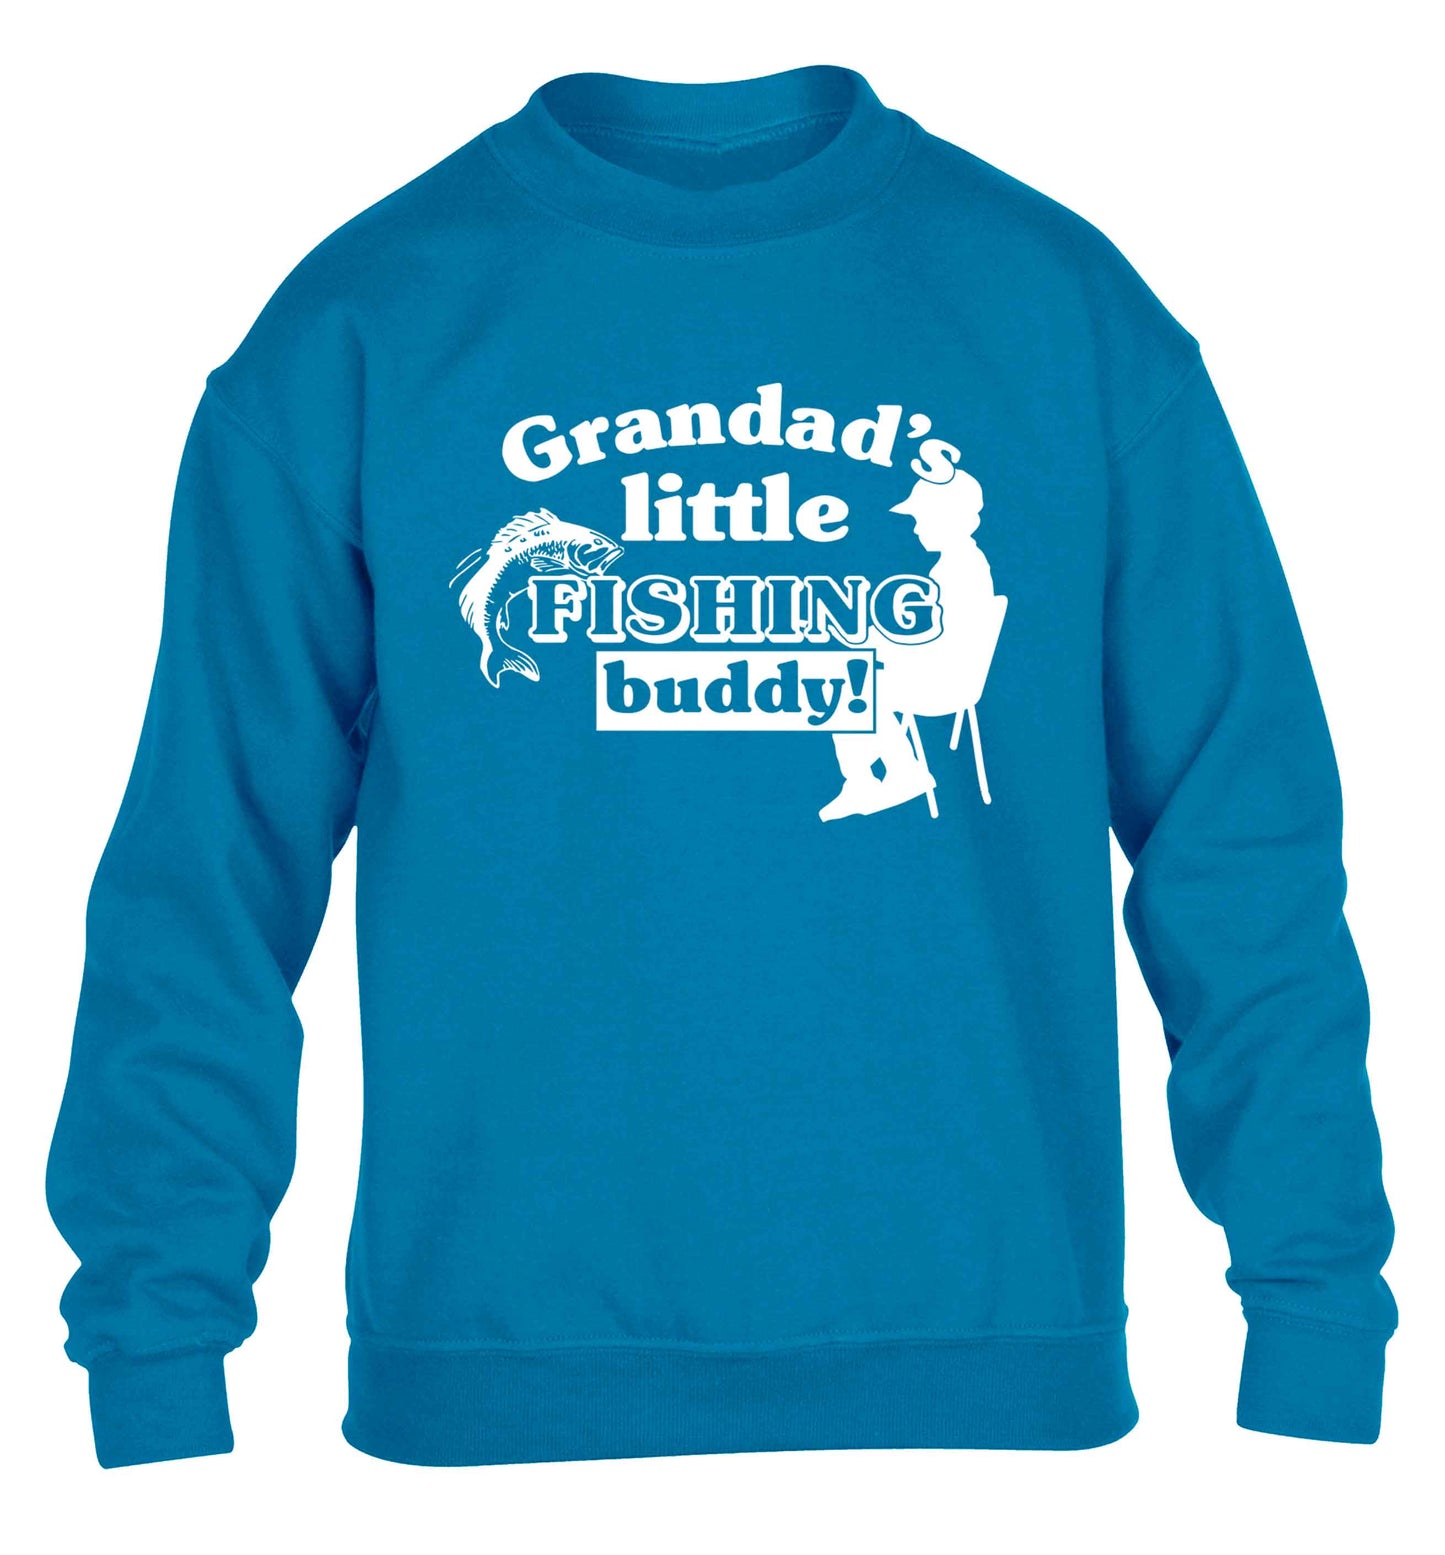 Grandad's little fishing buddy! children's blue sweater 12-13 Years